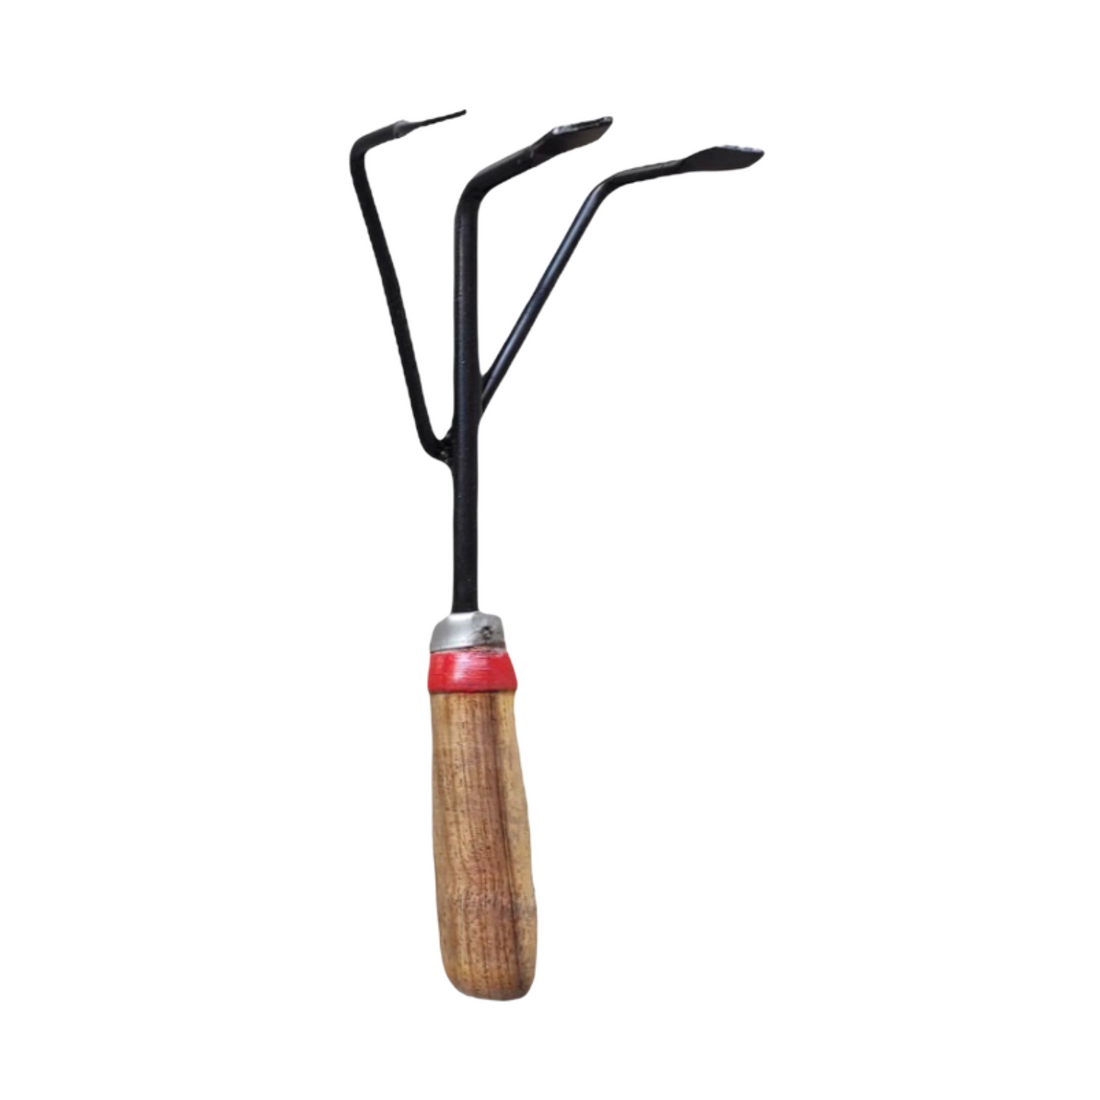 Hand Cultivator Gardening Tool - Wooden Handle